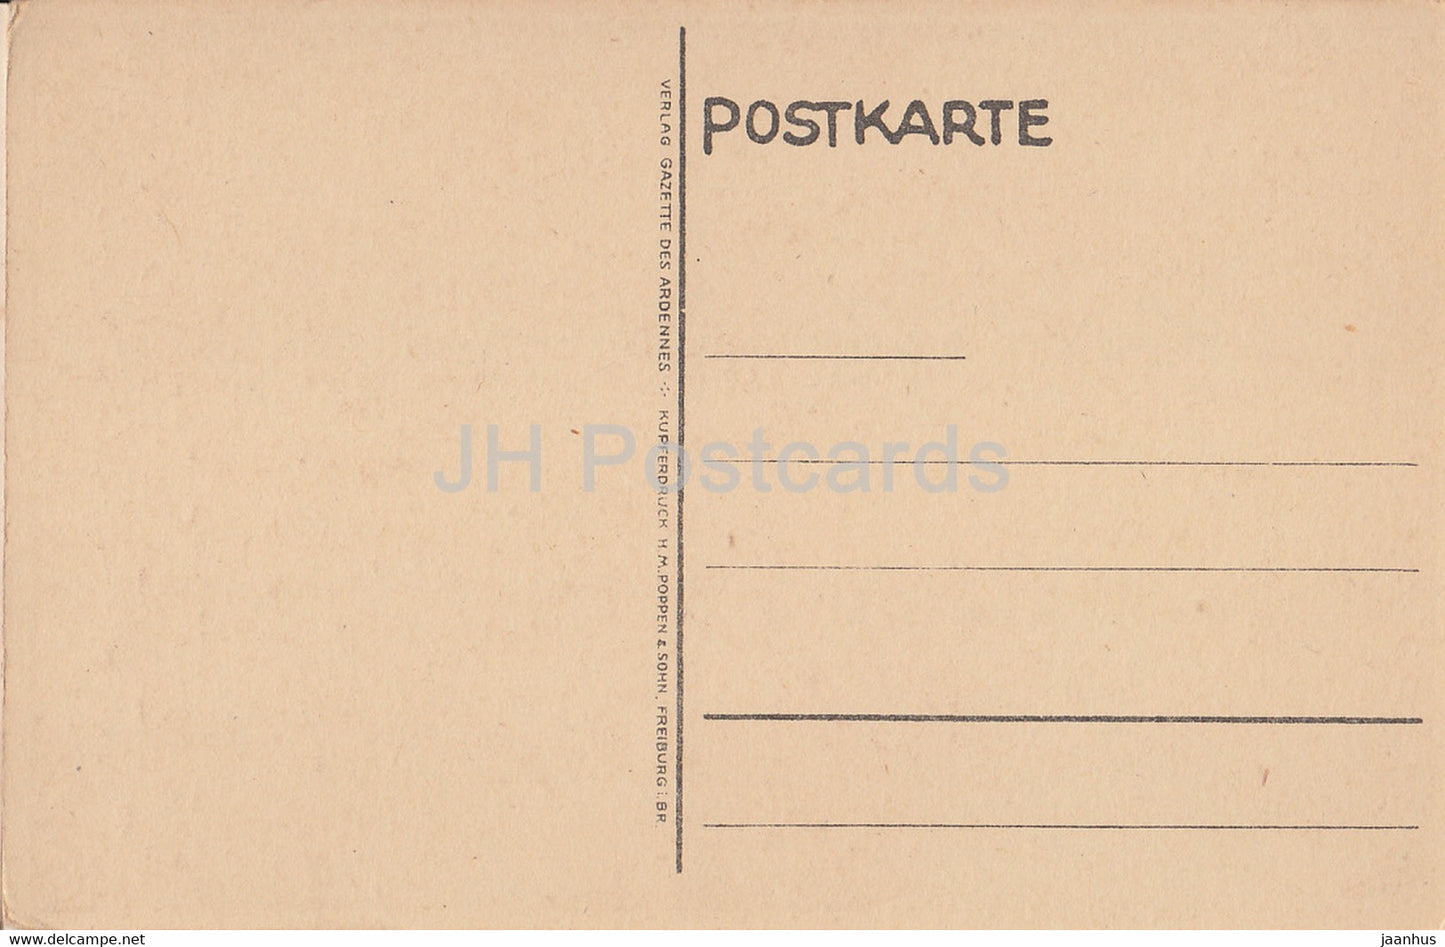 Douai - carte postale ancienne - France - inutilisée